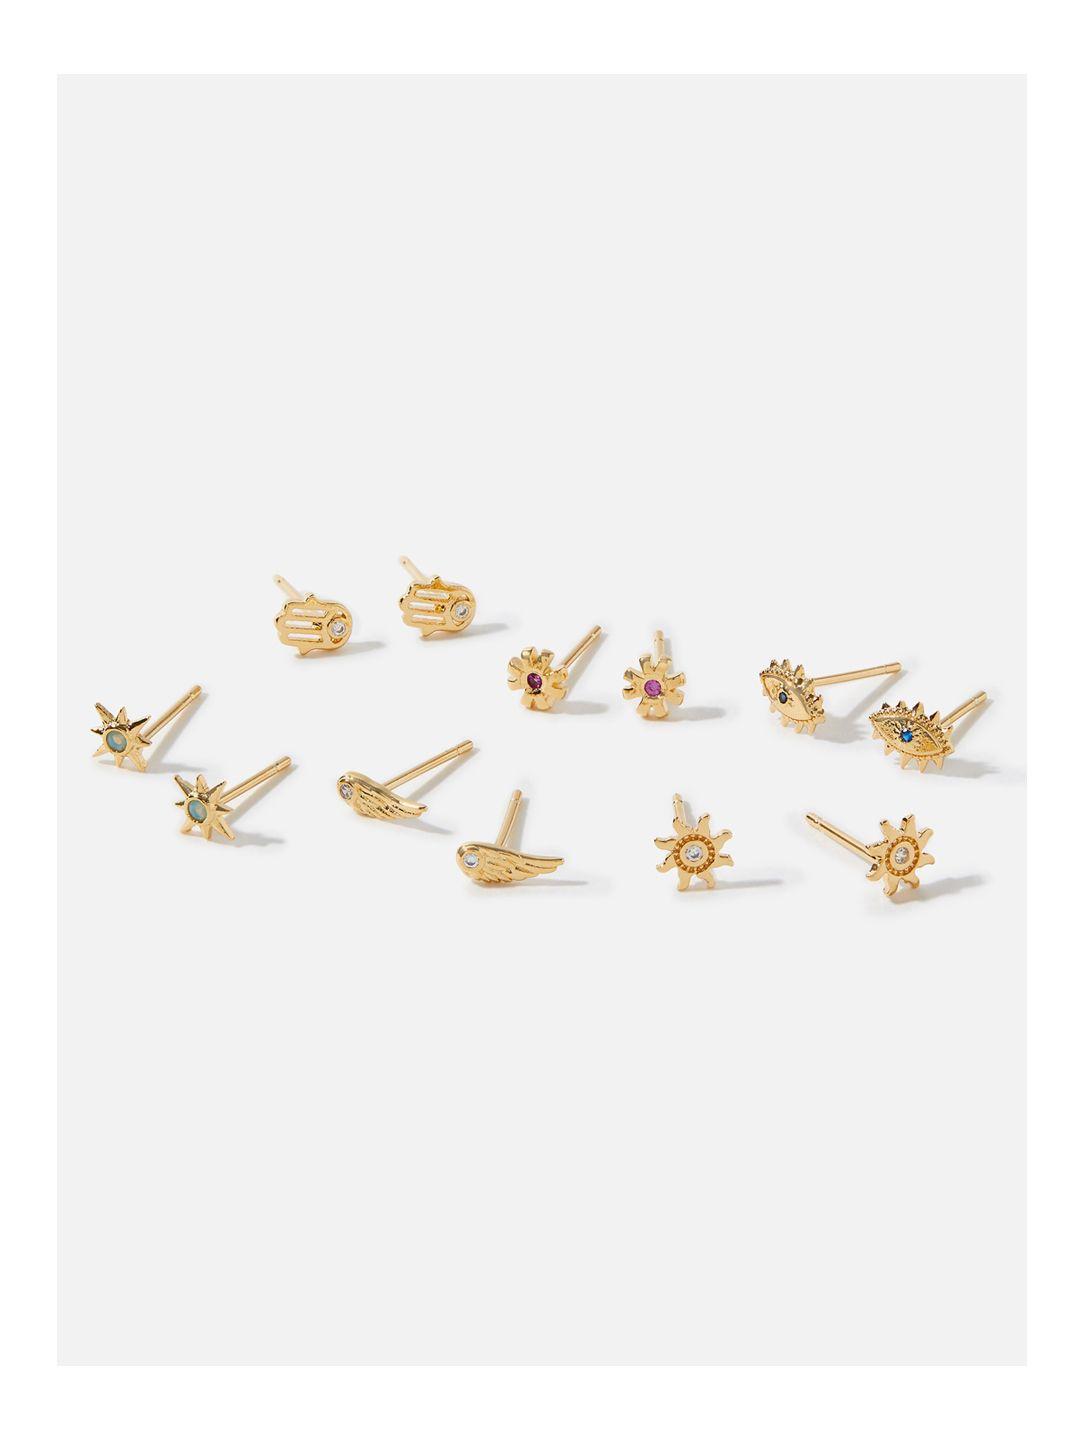 accessorize woman gold-toned set of 12 geometric studs earrings